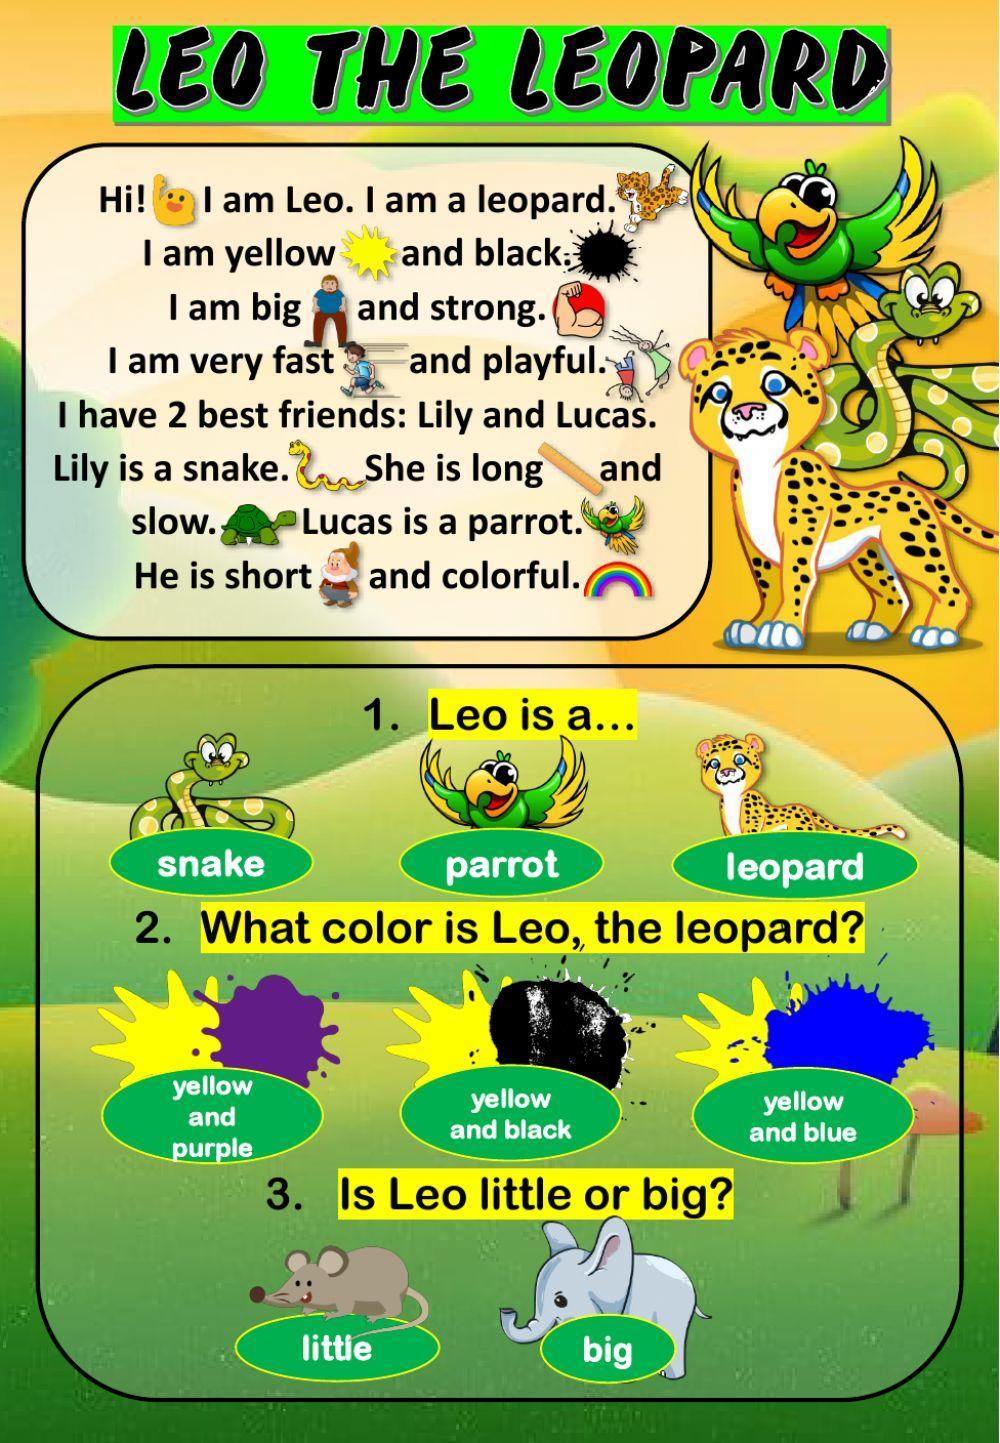 Leo the leopard - Reading Comprehension